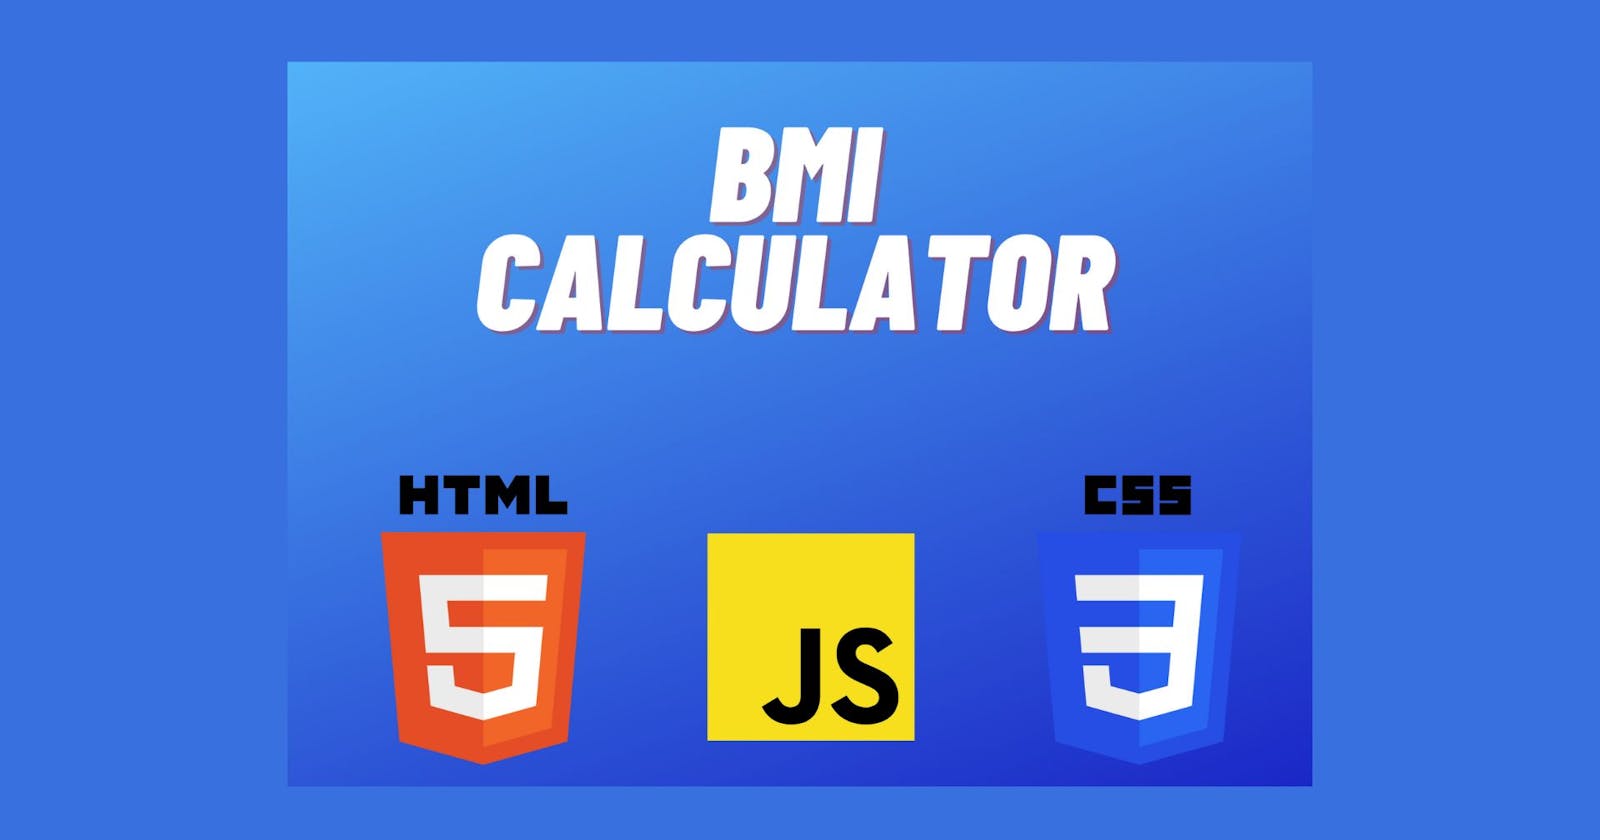 How To Make Bmi Calculator